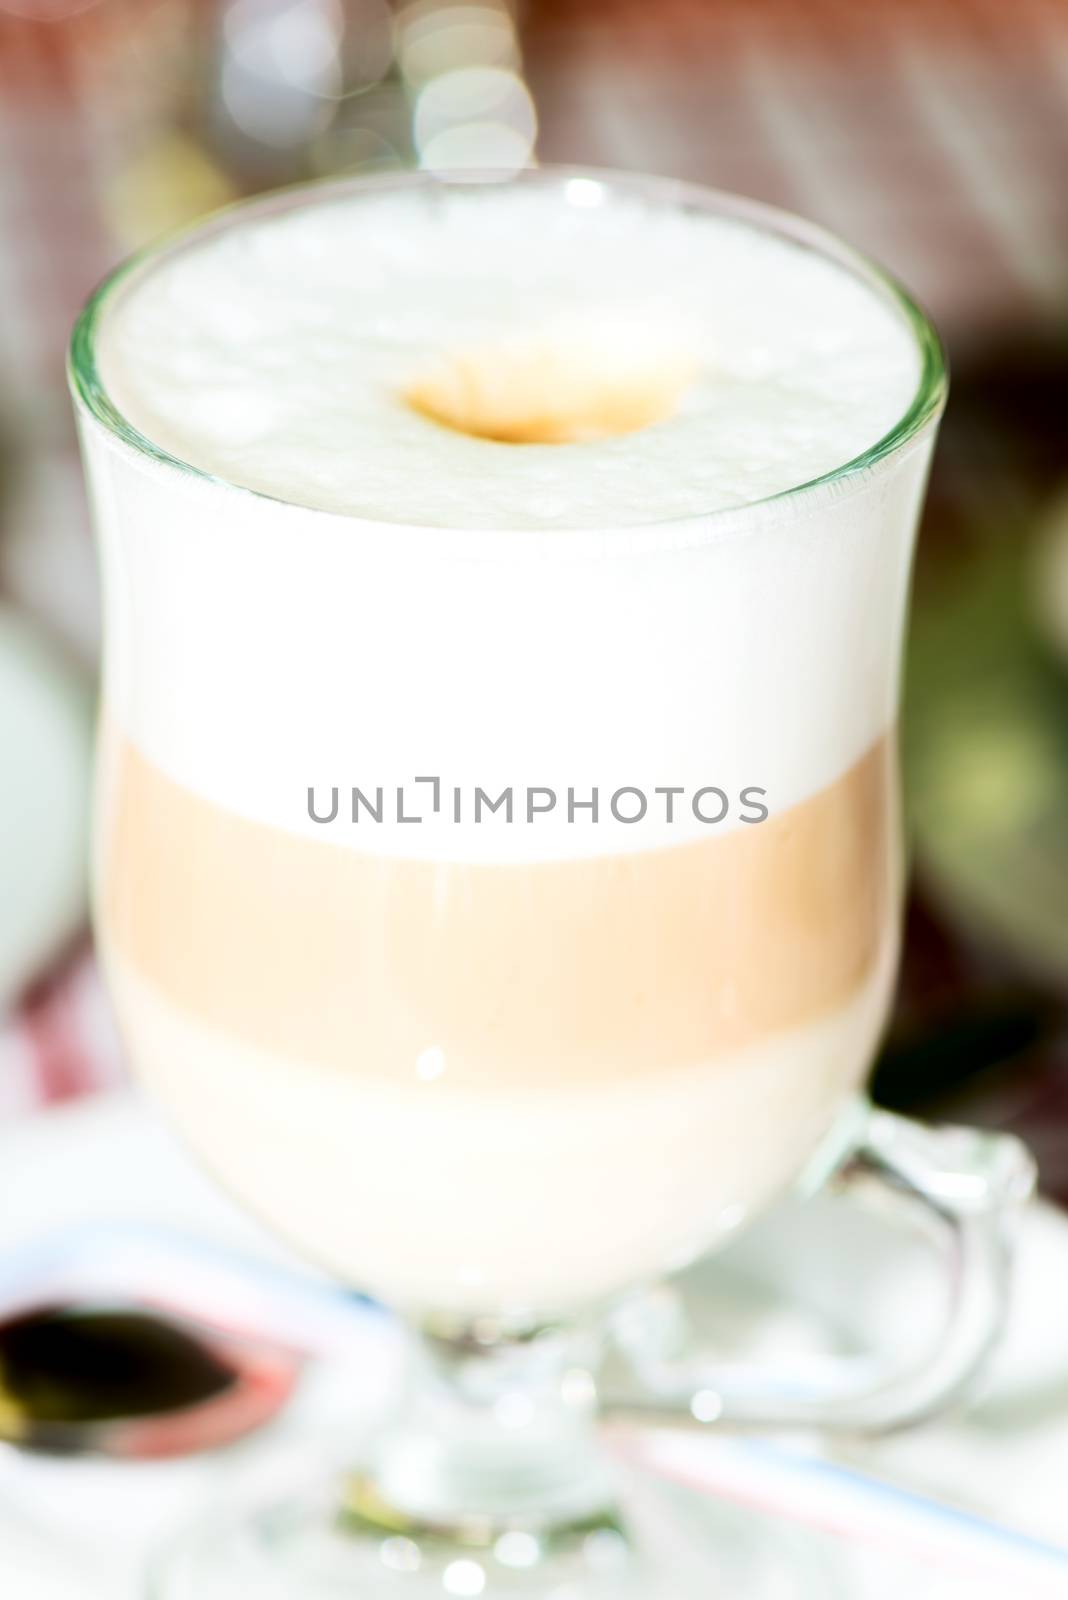 Layered cappuccino in a clear glass mug closeup by Nanisimova